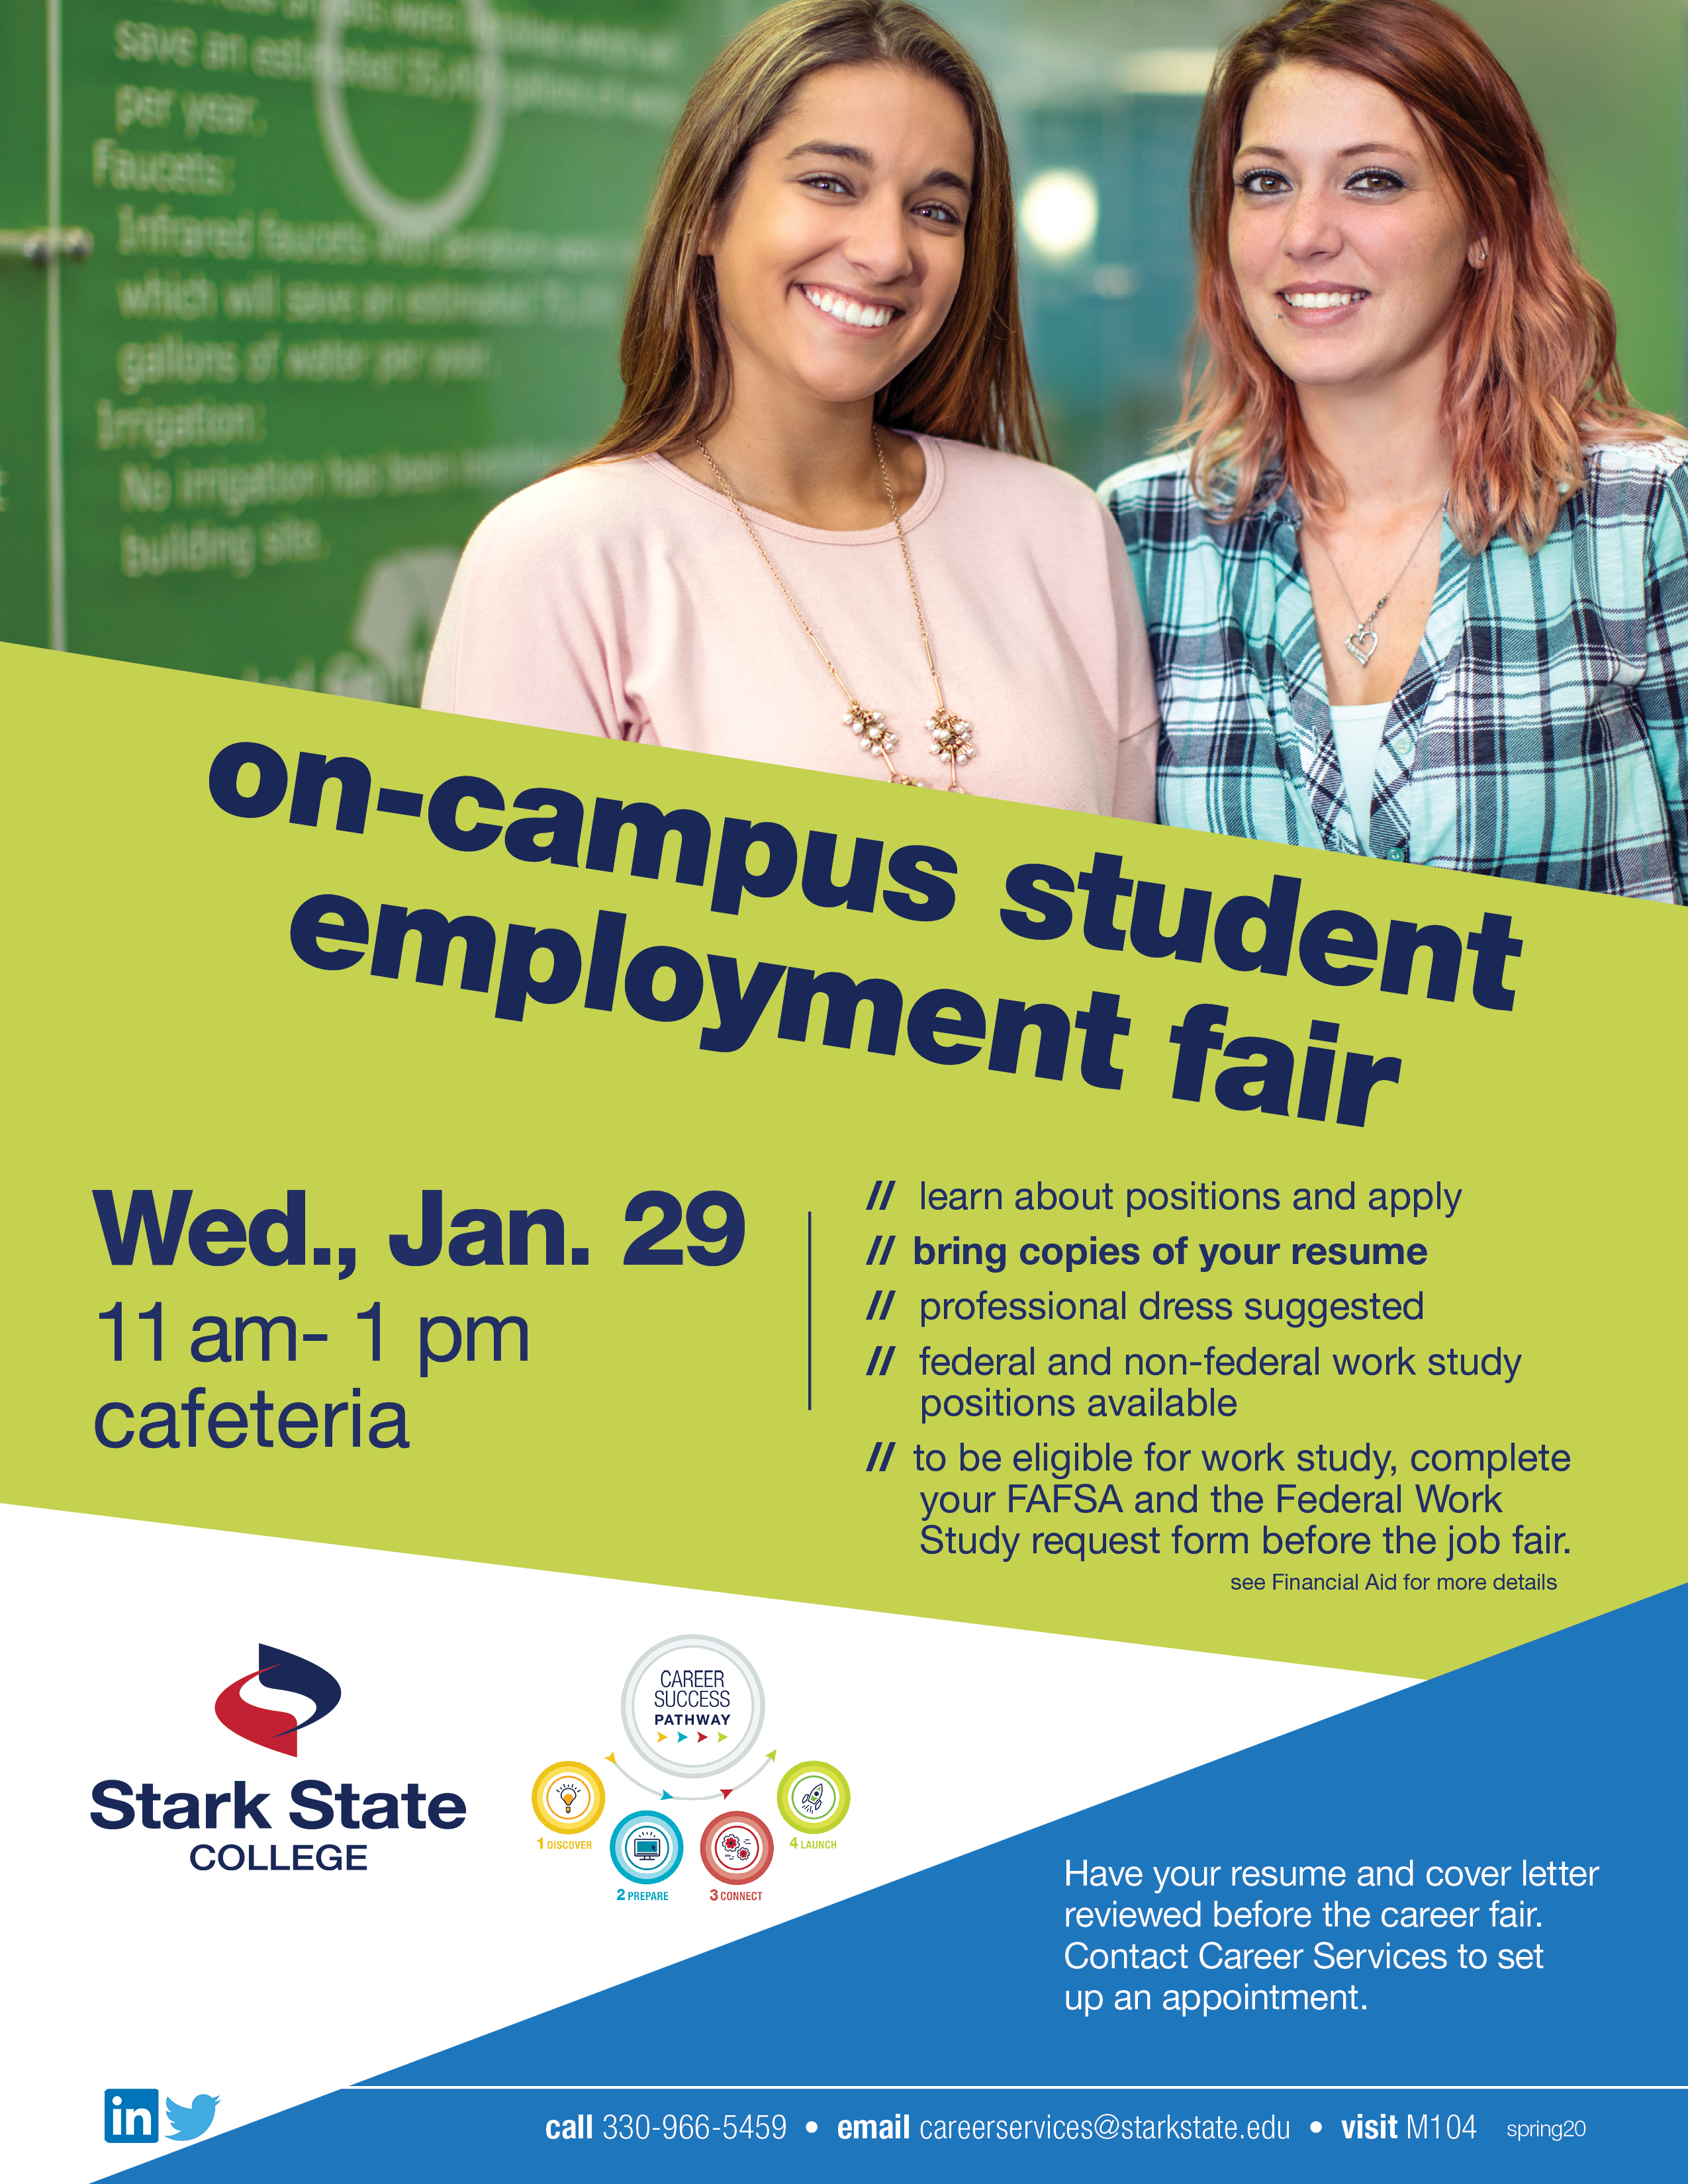 On-campus student employment fair @ main campus cafeteria